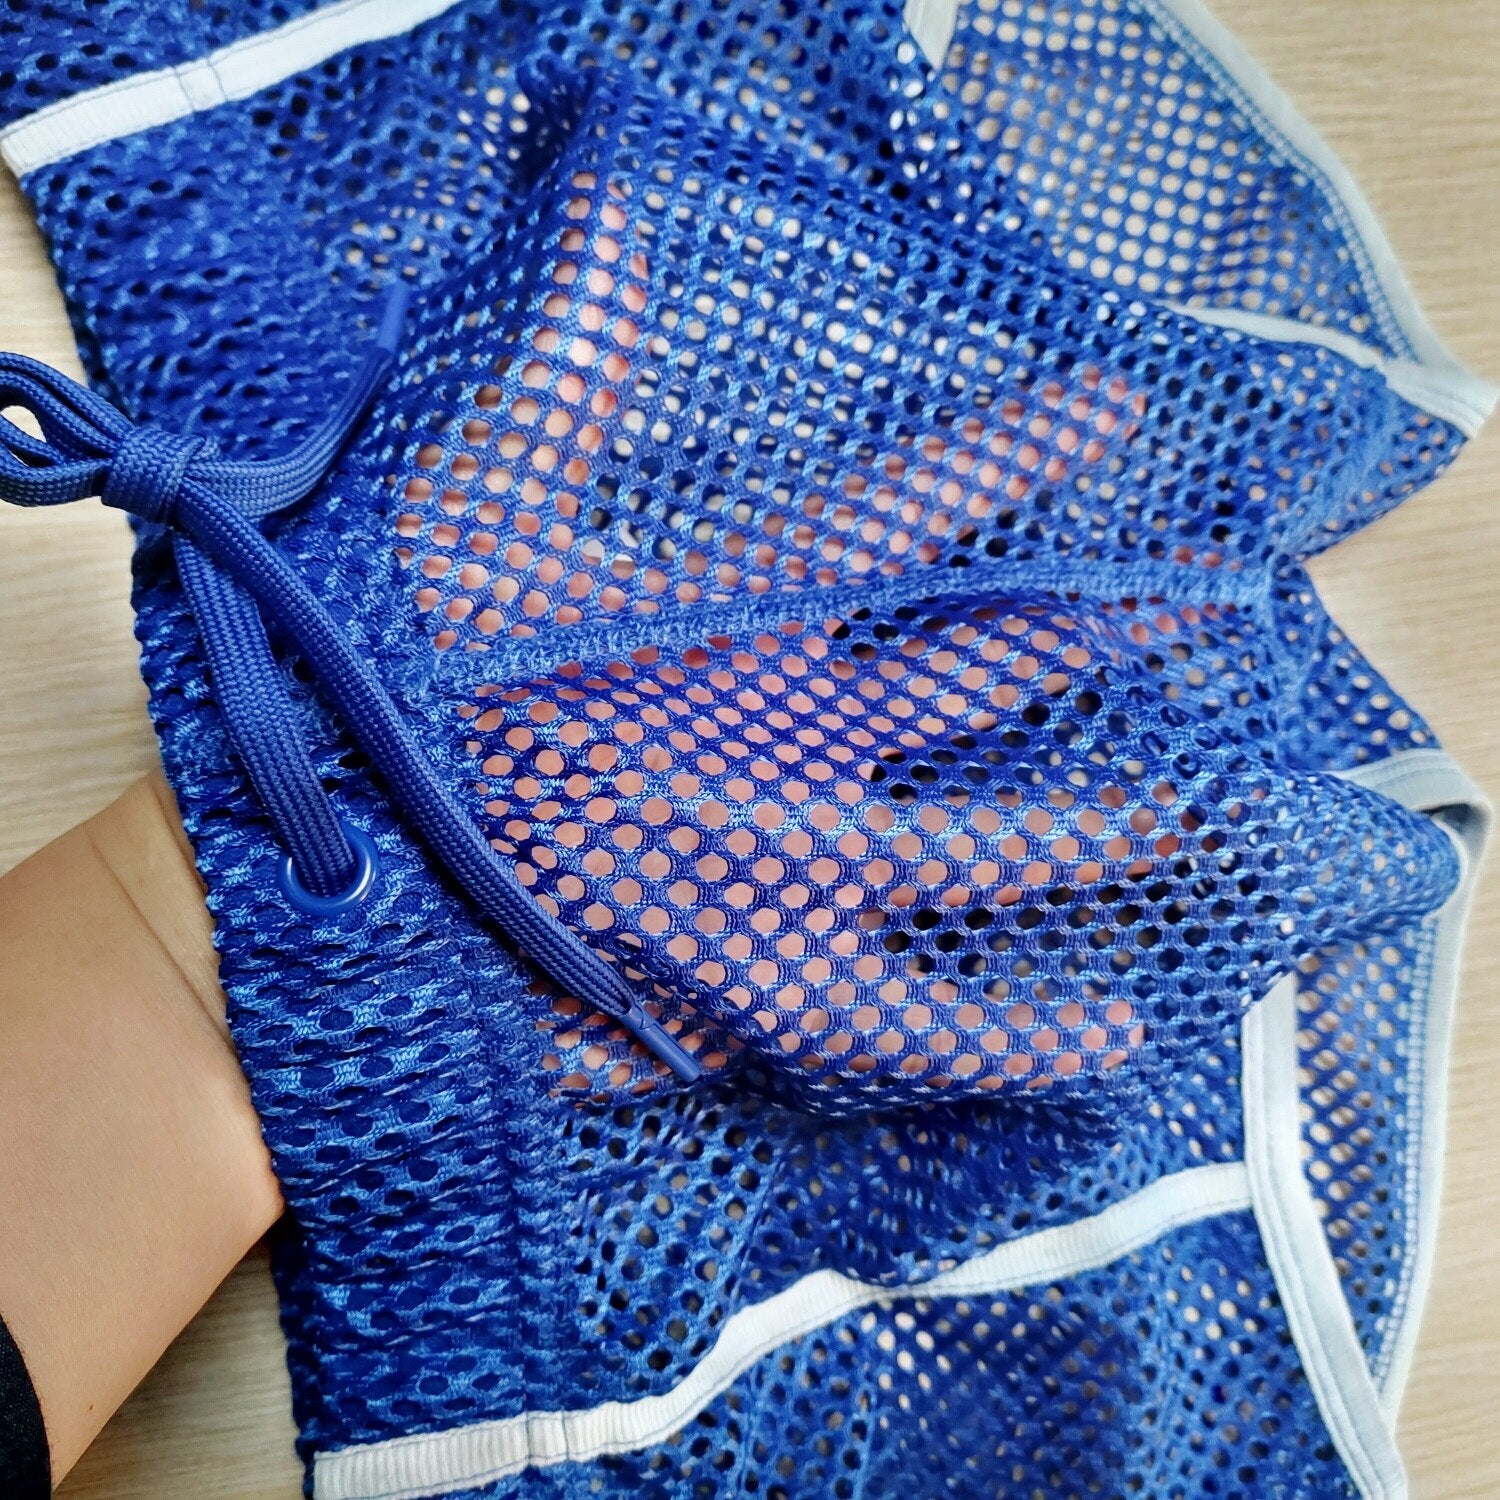 sexy men's mesh shorts